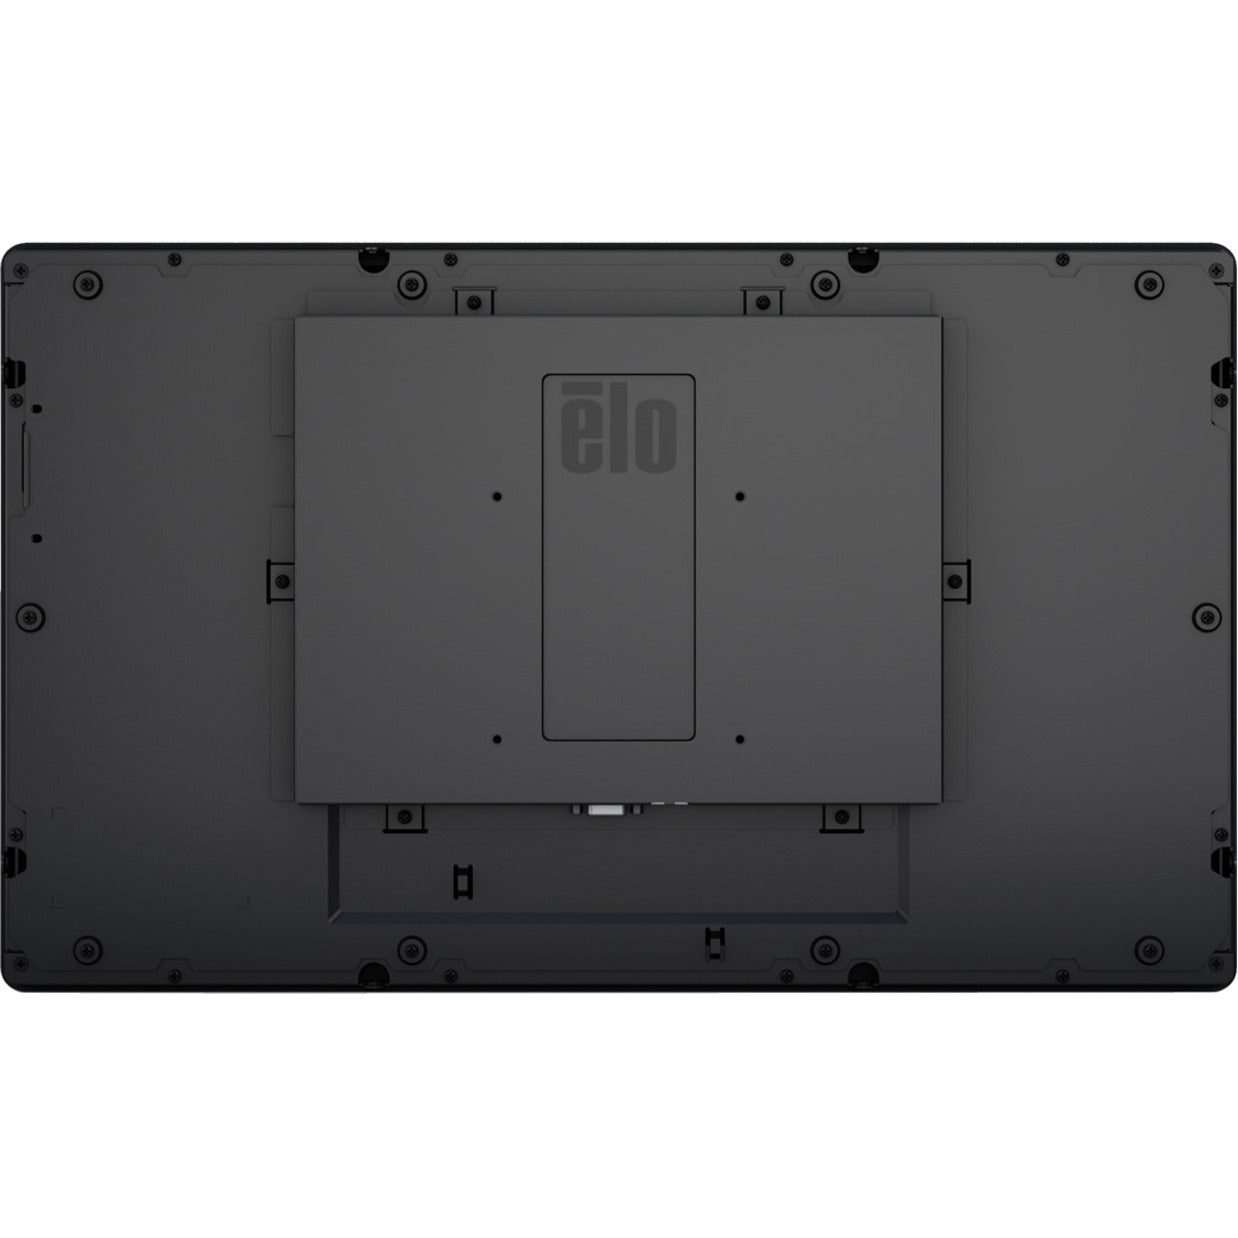 Elo E330620 2294L 21.5" Open Frame Touchscreen Monitor, Full HD, HDMI VGA DisplayPort, 10-Touch